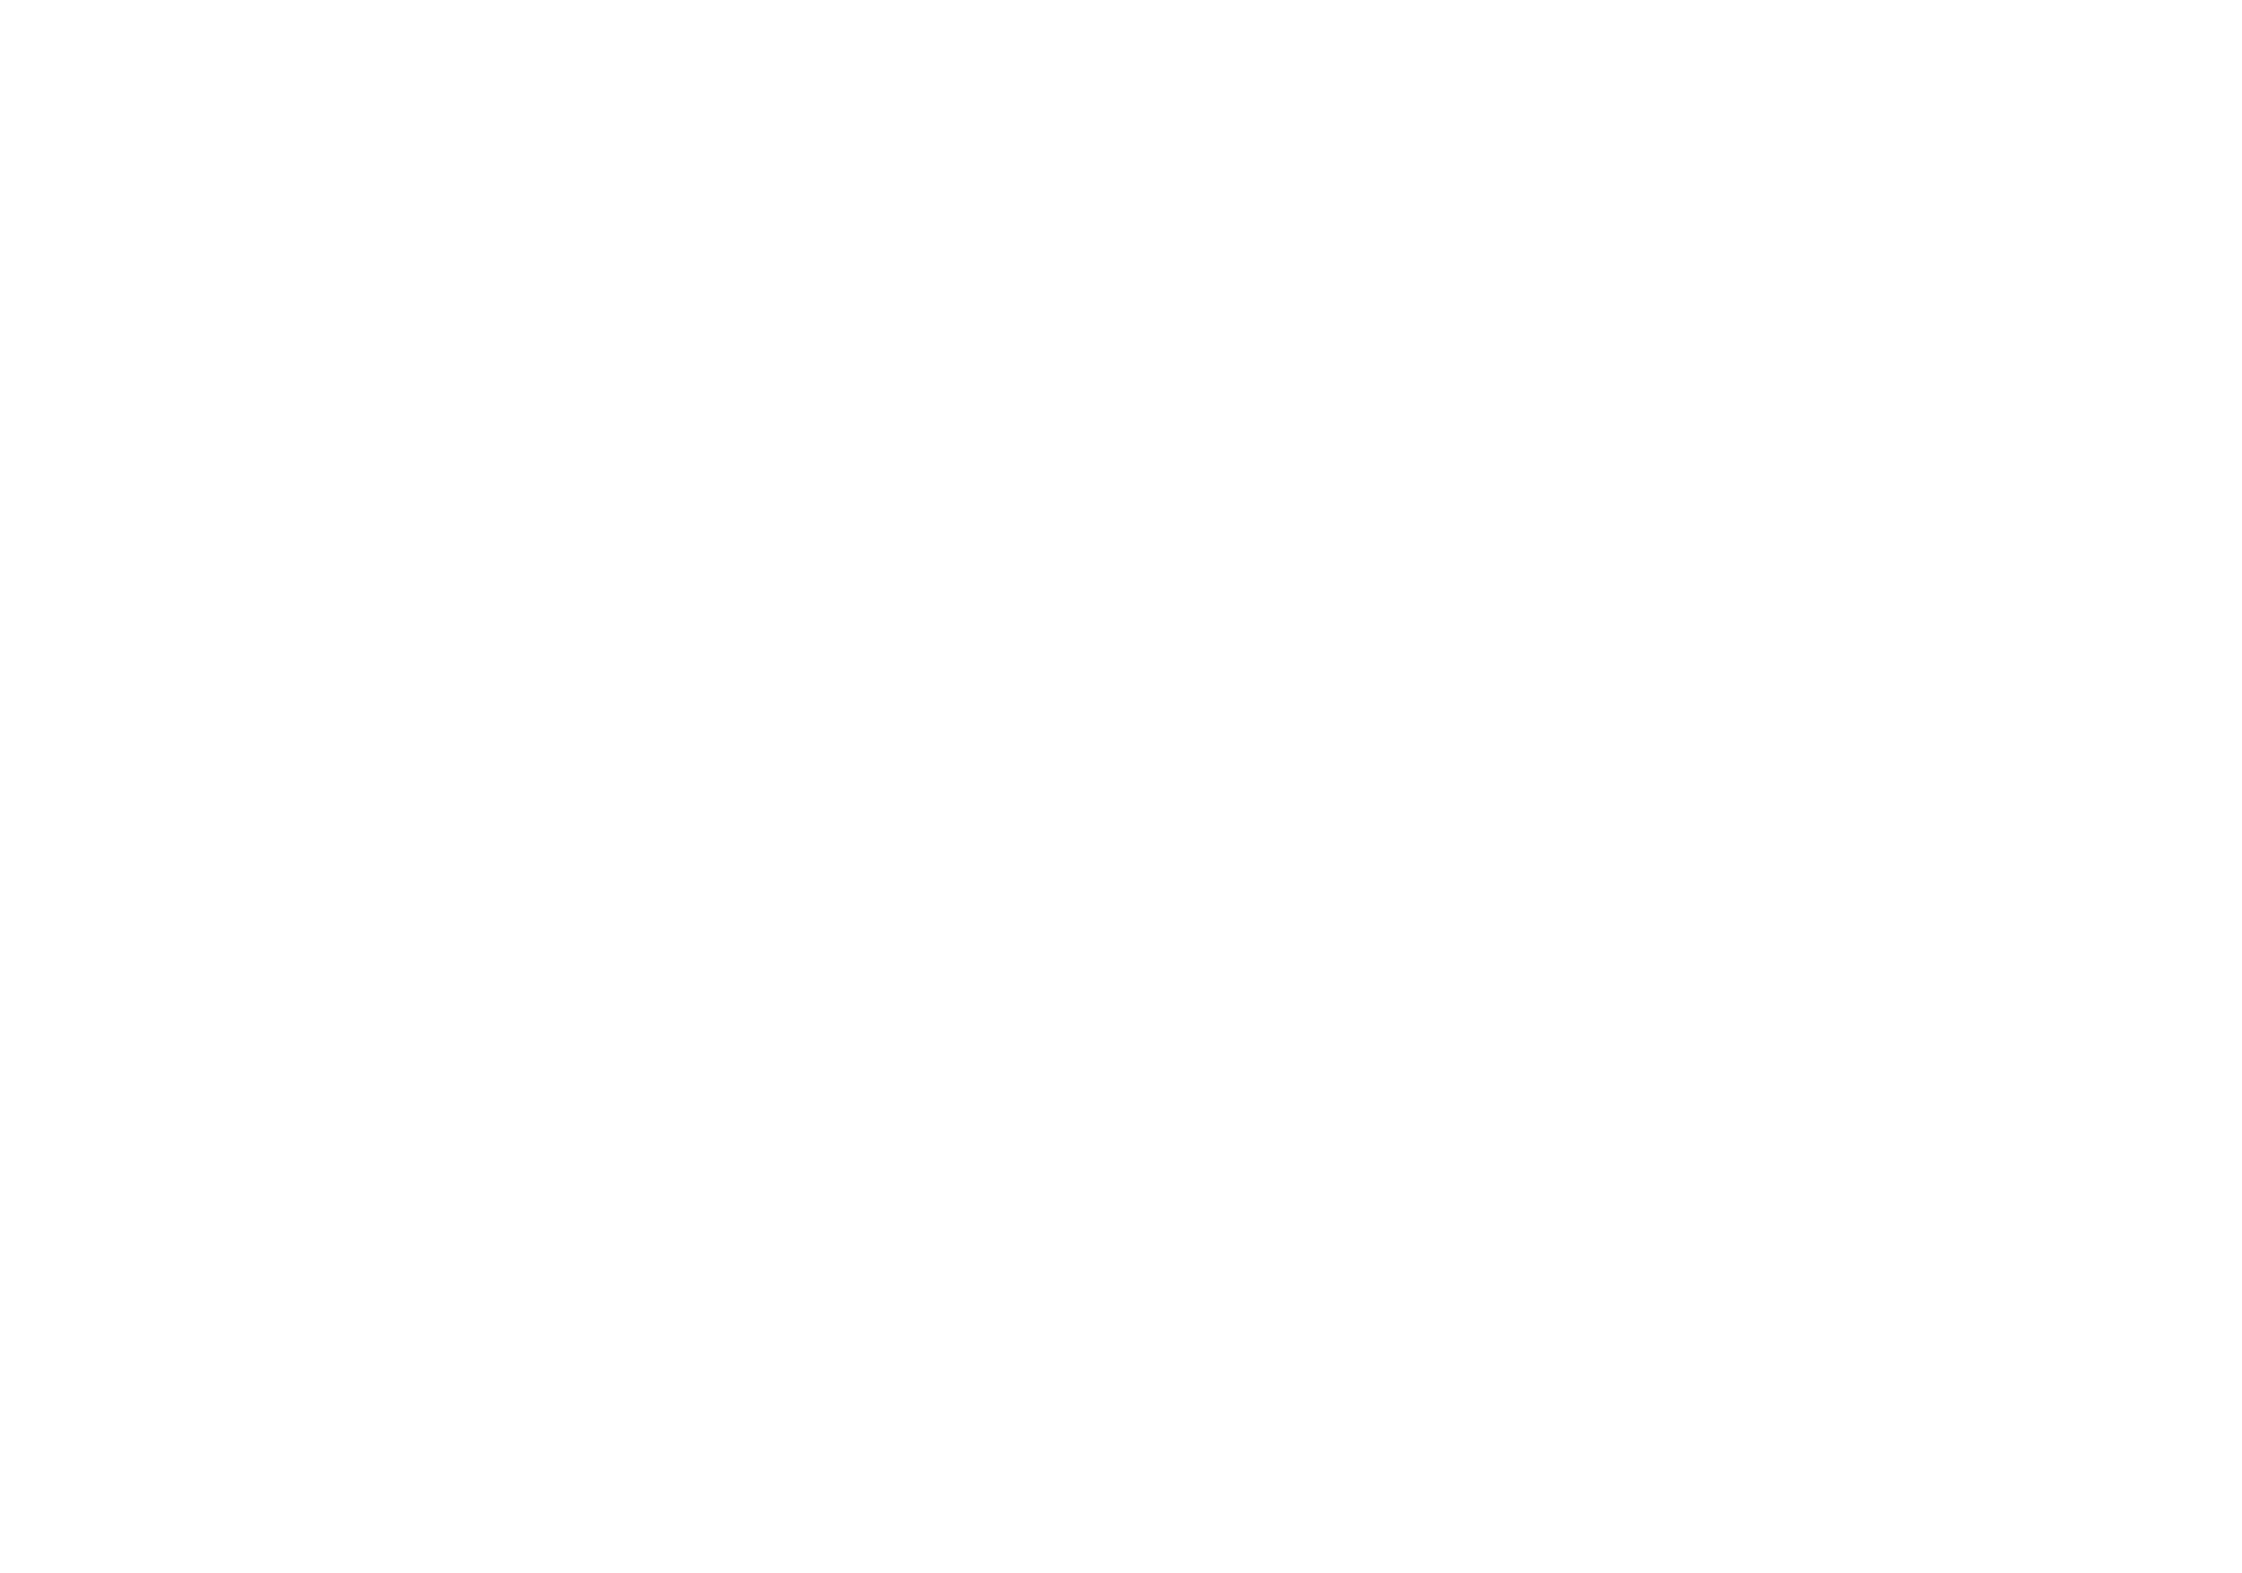 THE BLACK LOCK